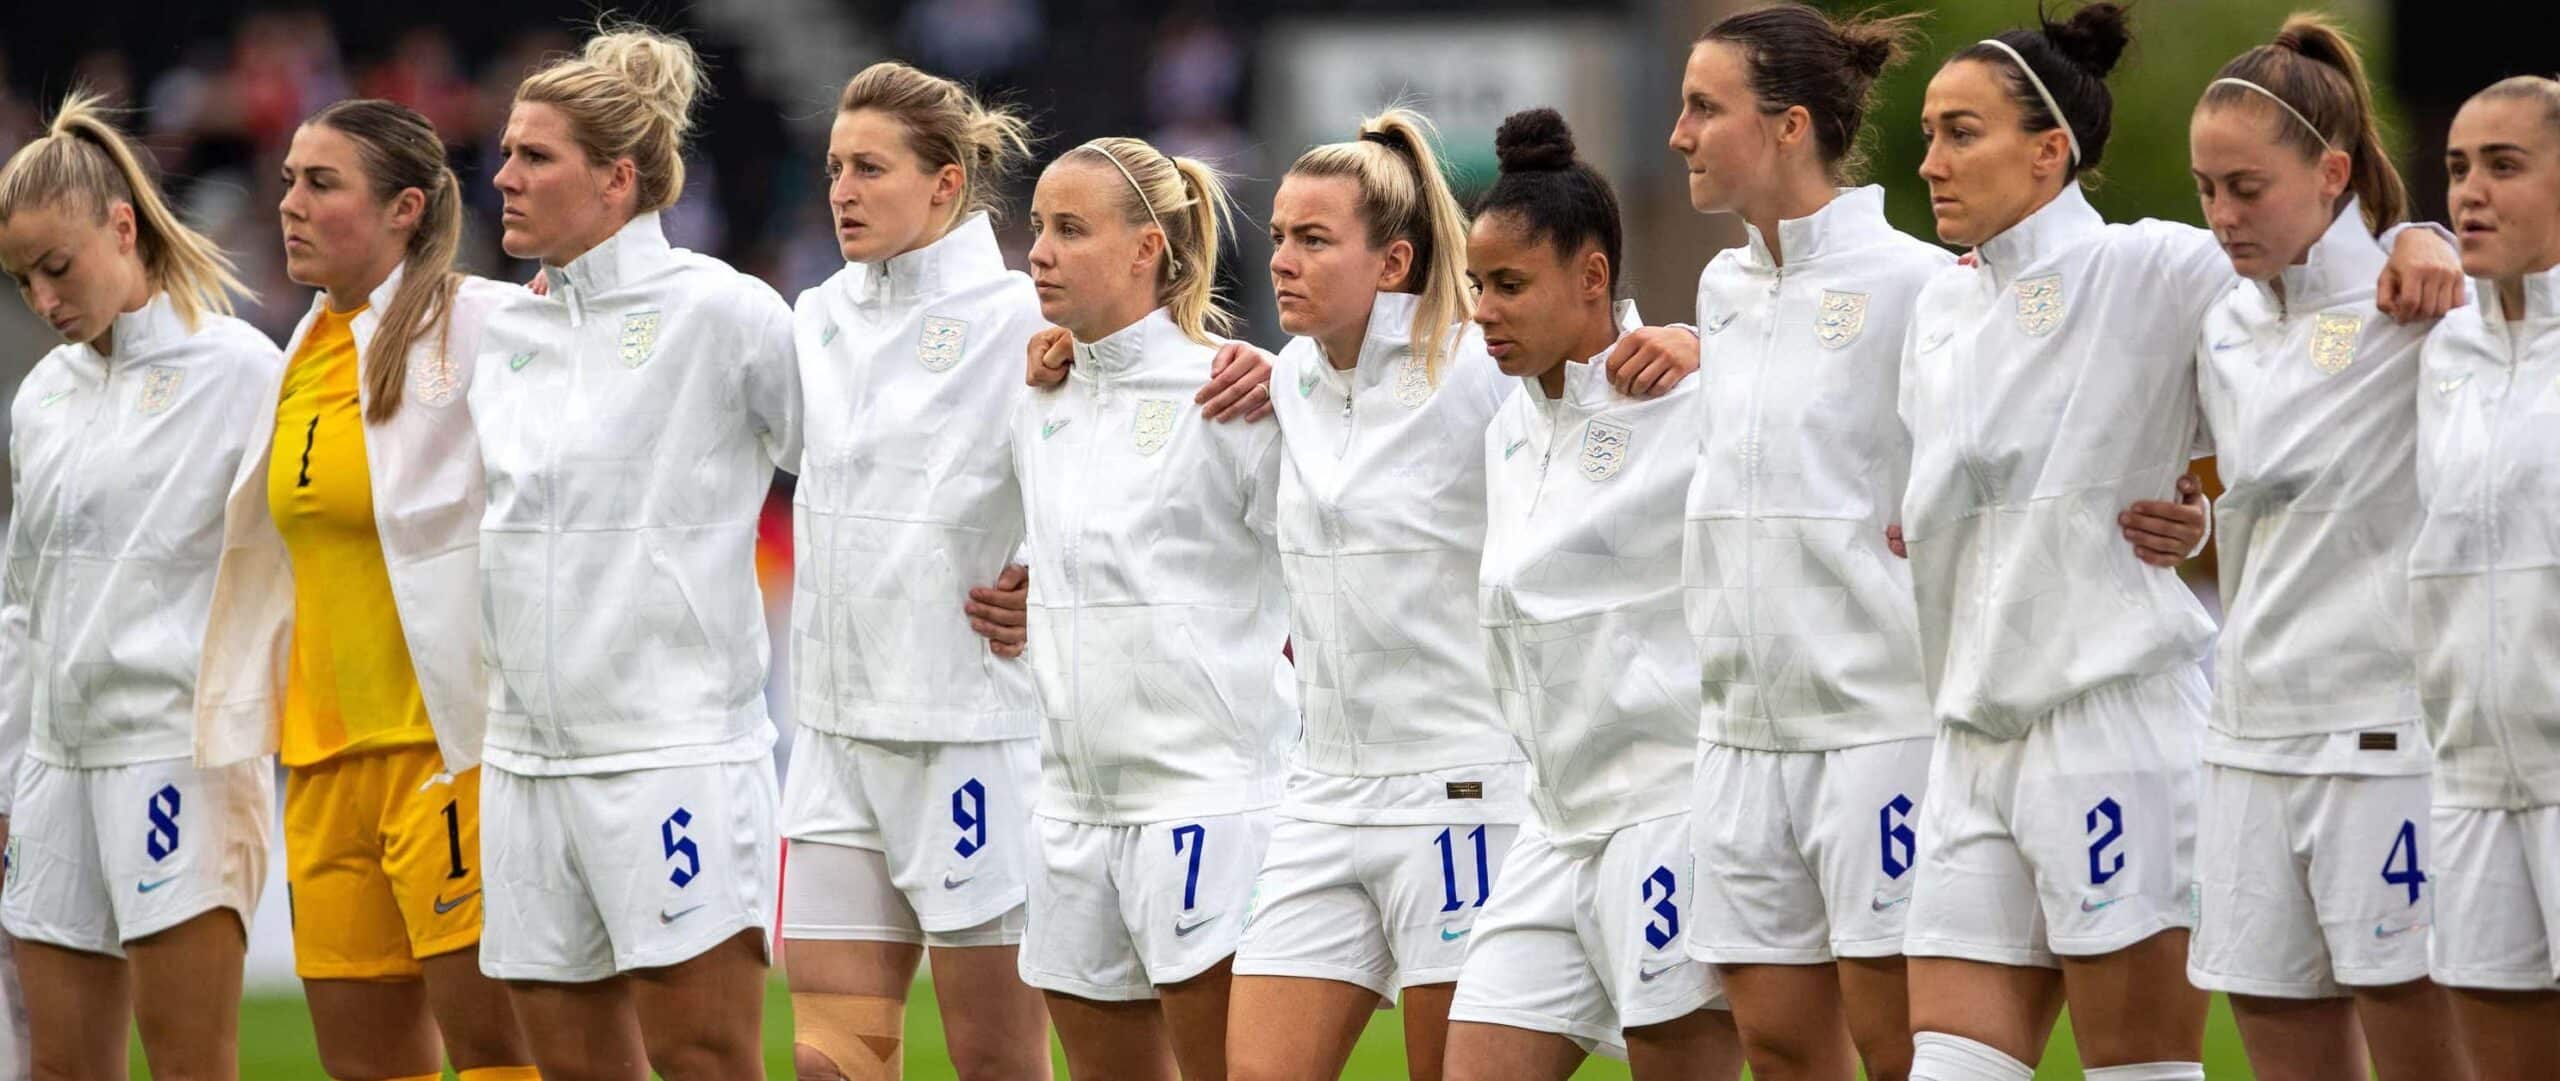 England women football team lineup before kickoff